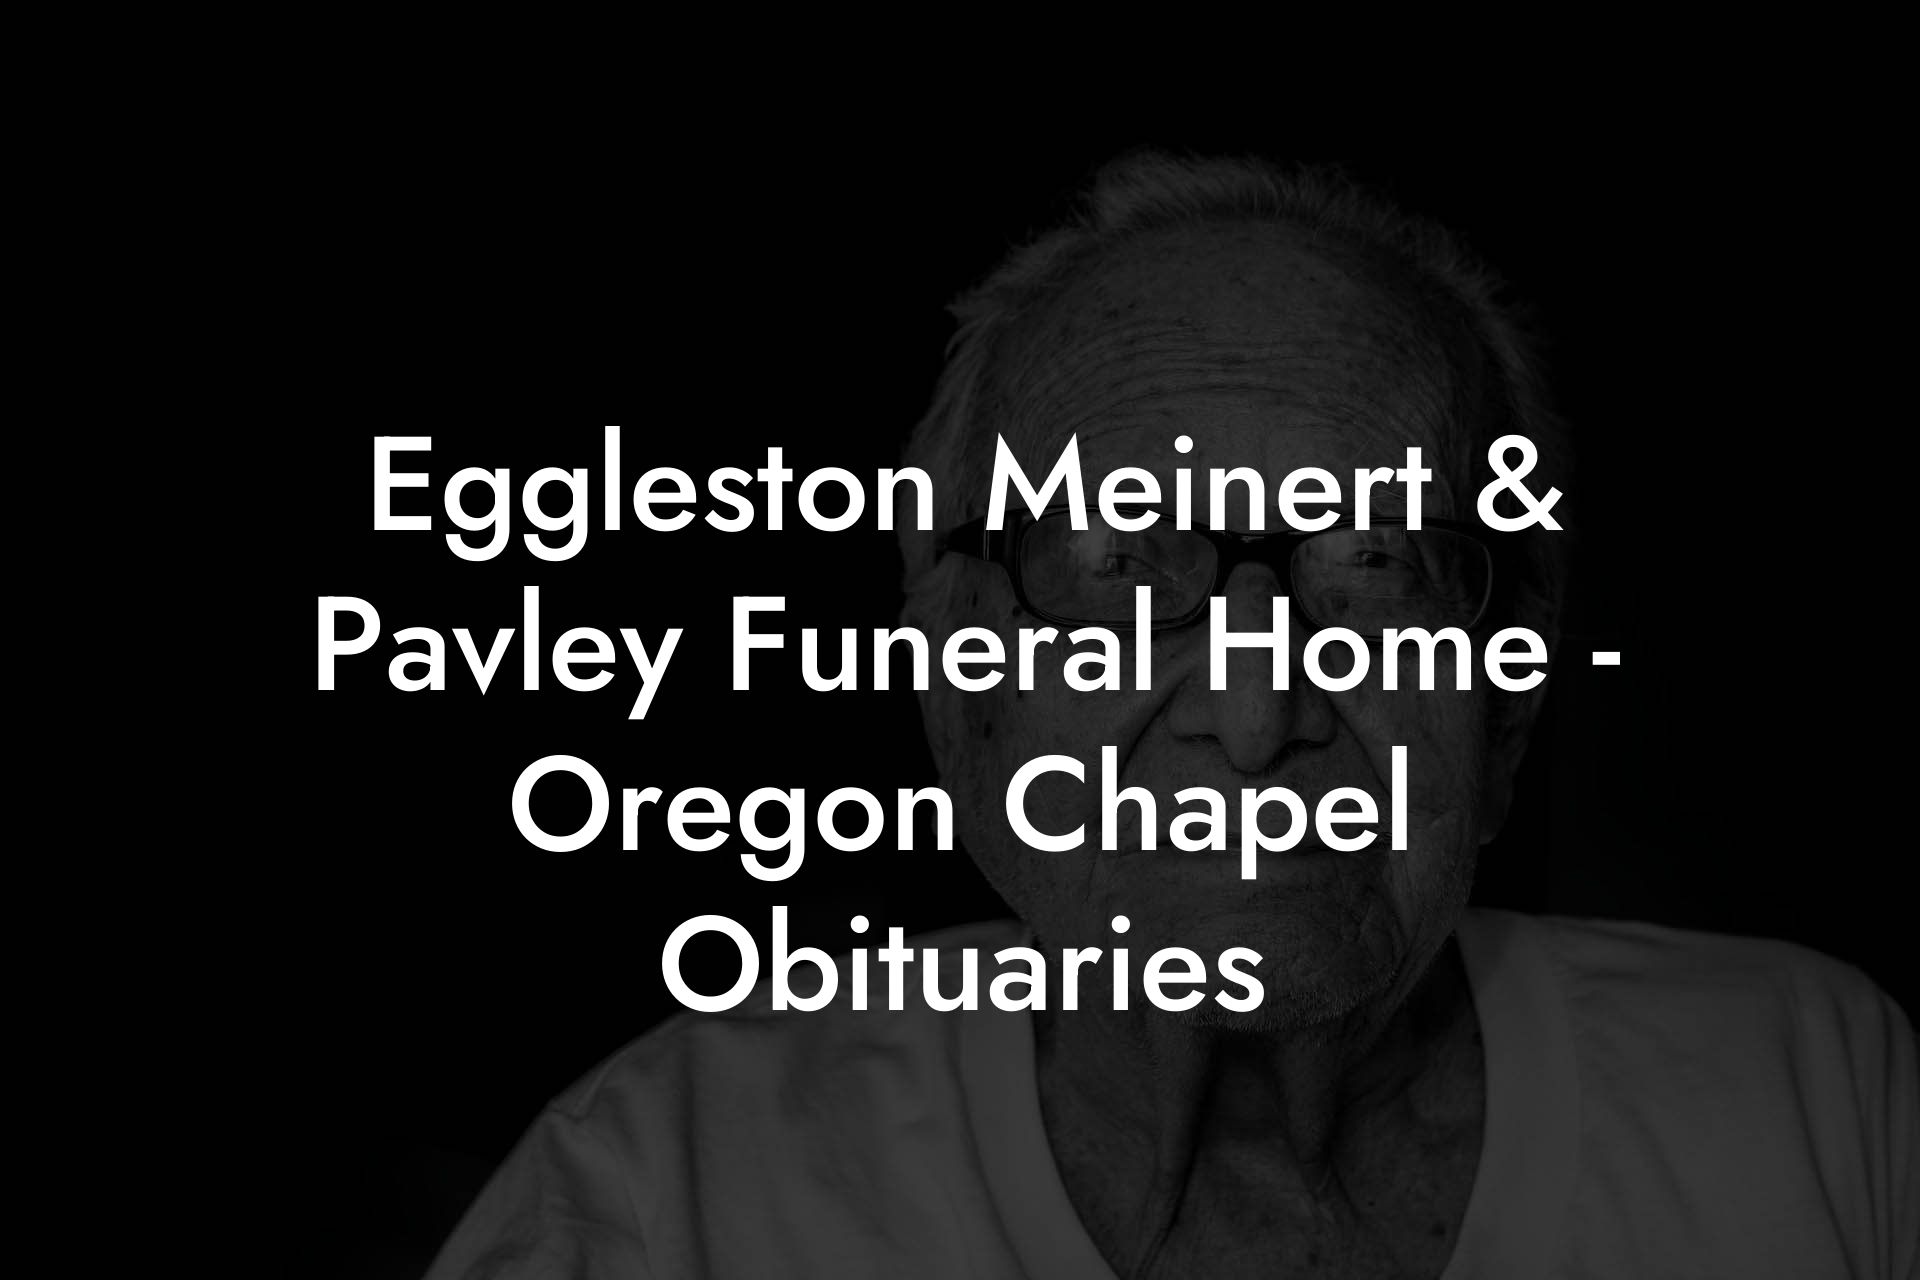 Eggleston Meinert & Pavley Funeral Home - Oregon Chapel Obituaries